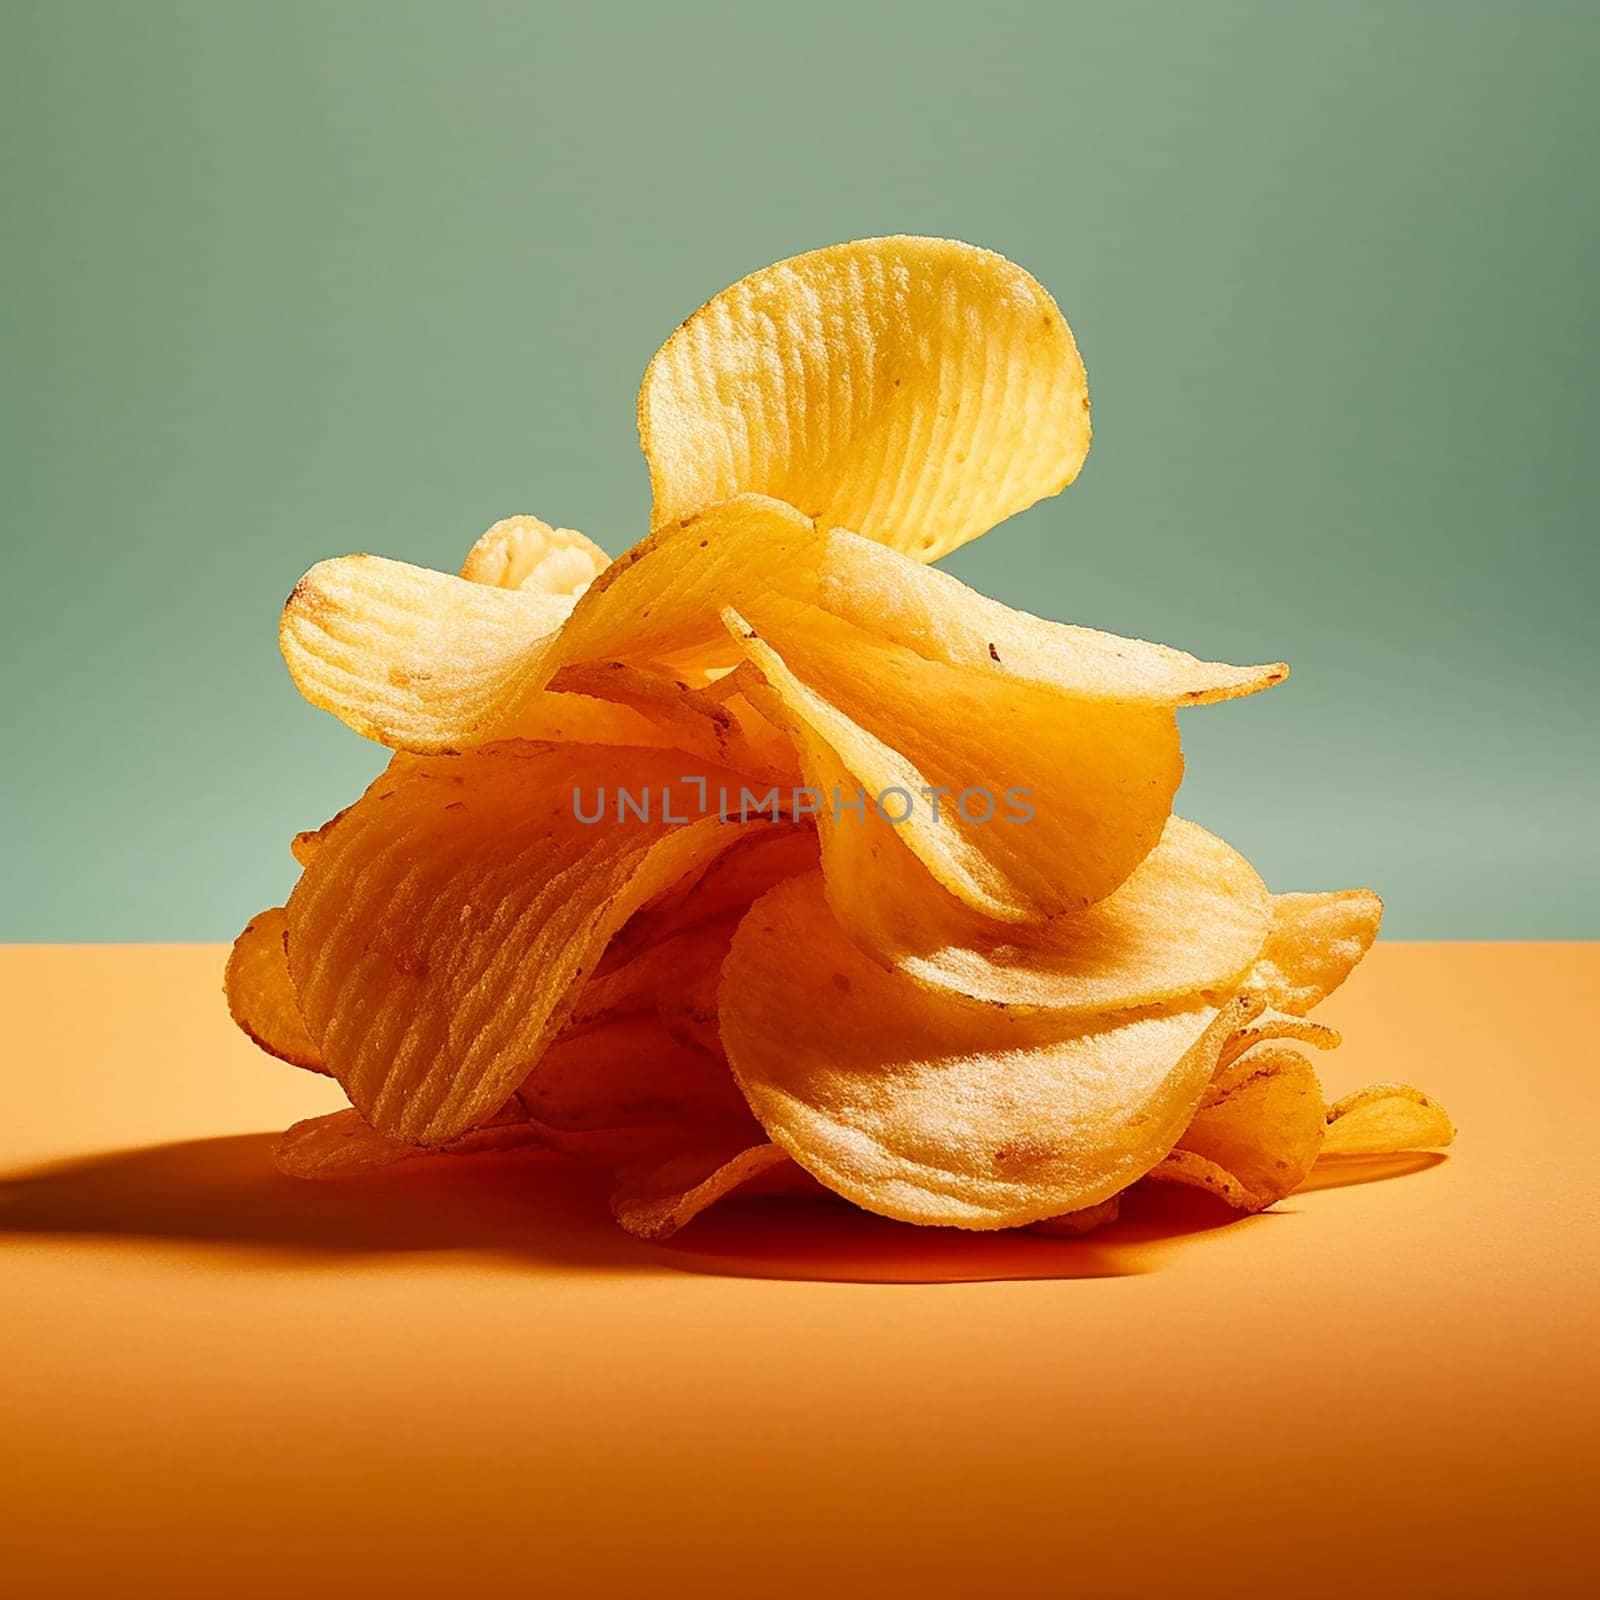 Exploding stack of crispy potato chips against dark background by Hype2art